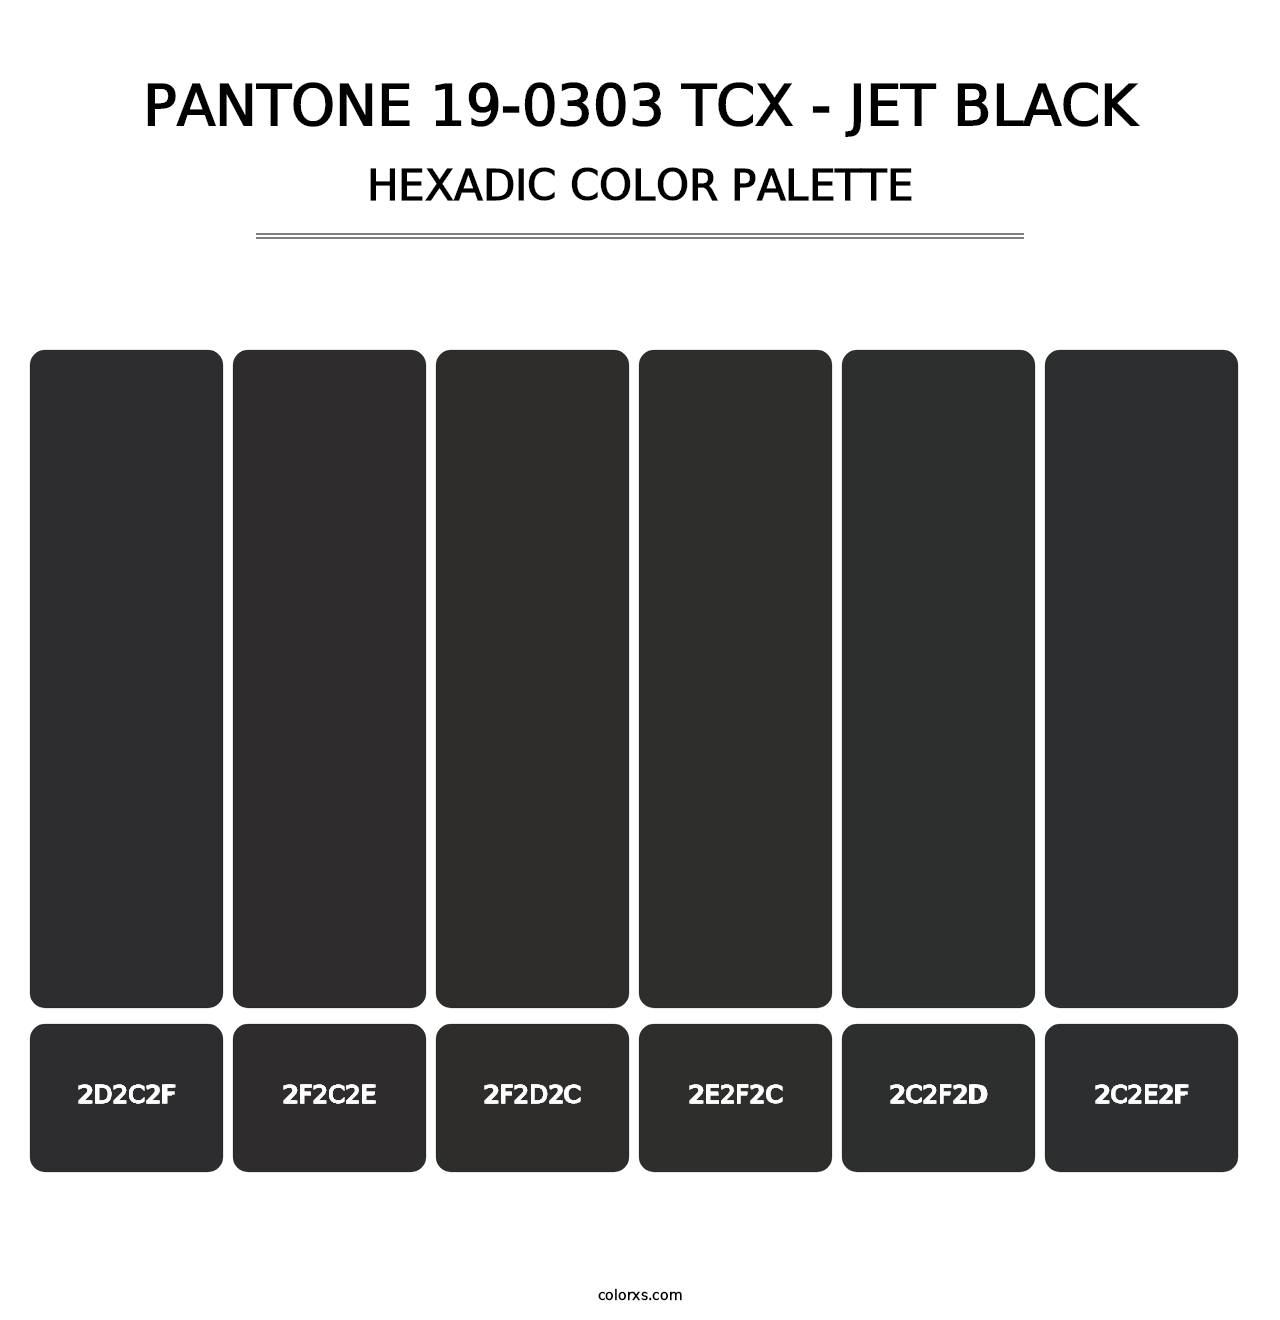 PANTONE 19-0303 TCX - Jet Black - Hexadic Color Palette